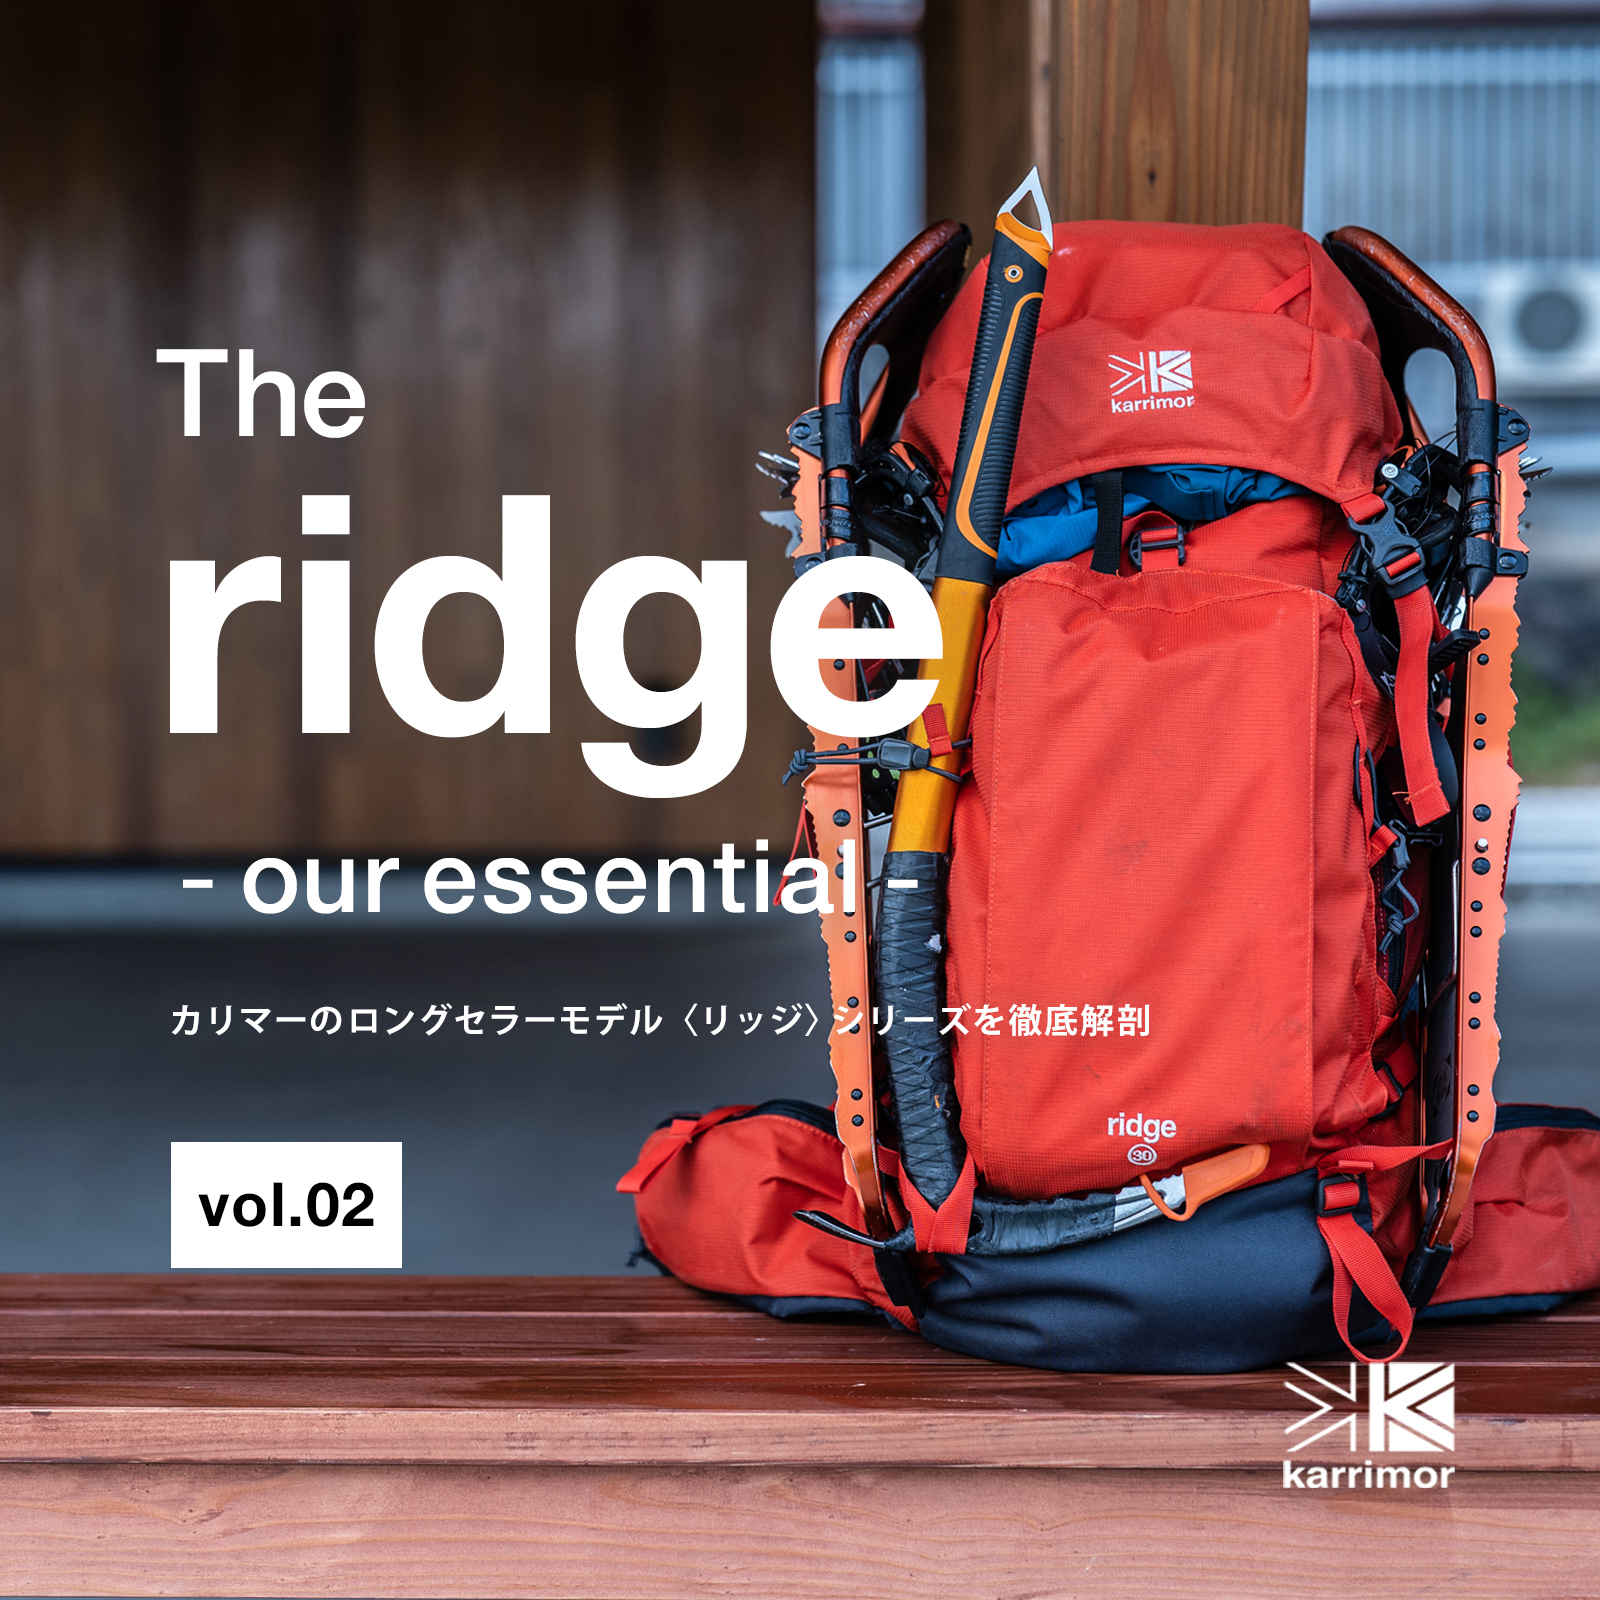 The ridge - our essential - vol.2